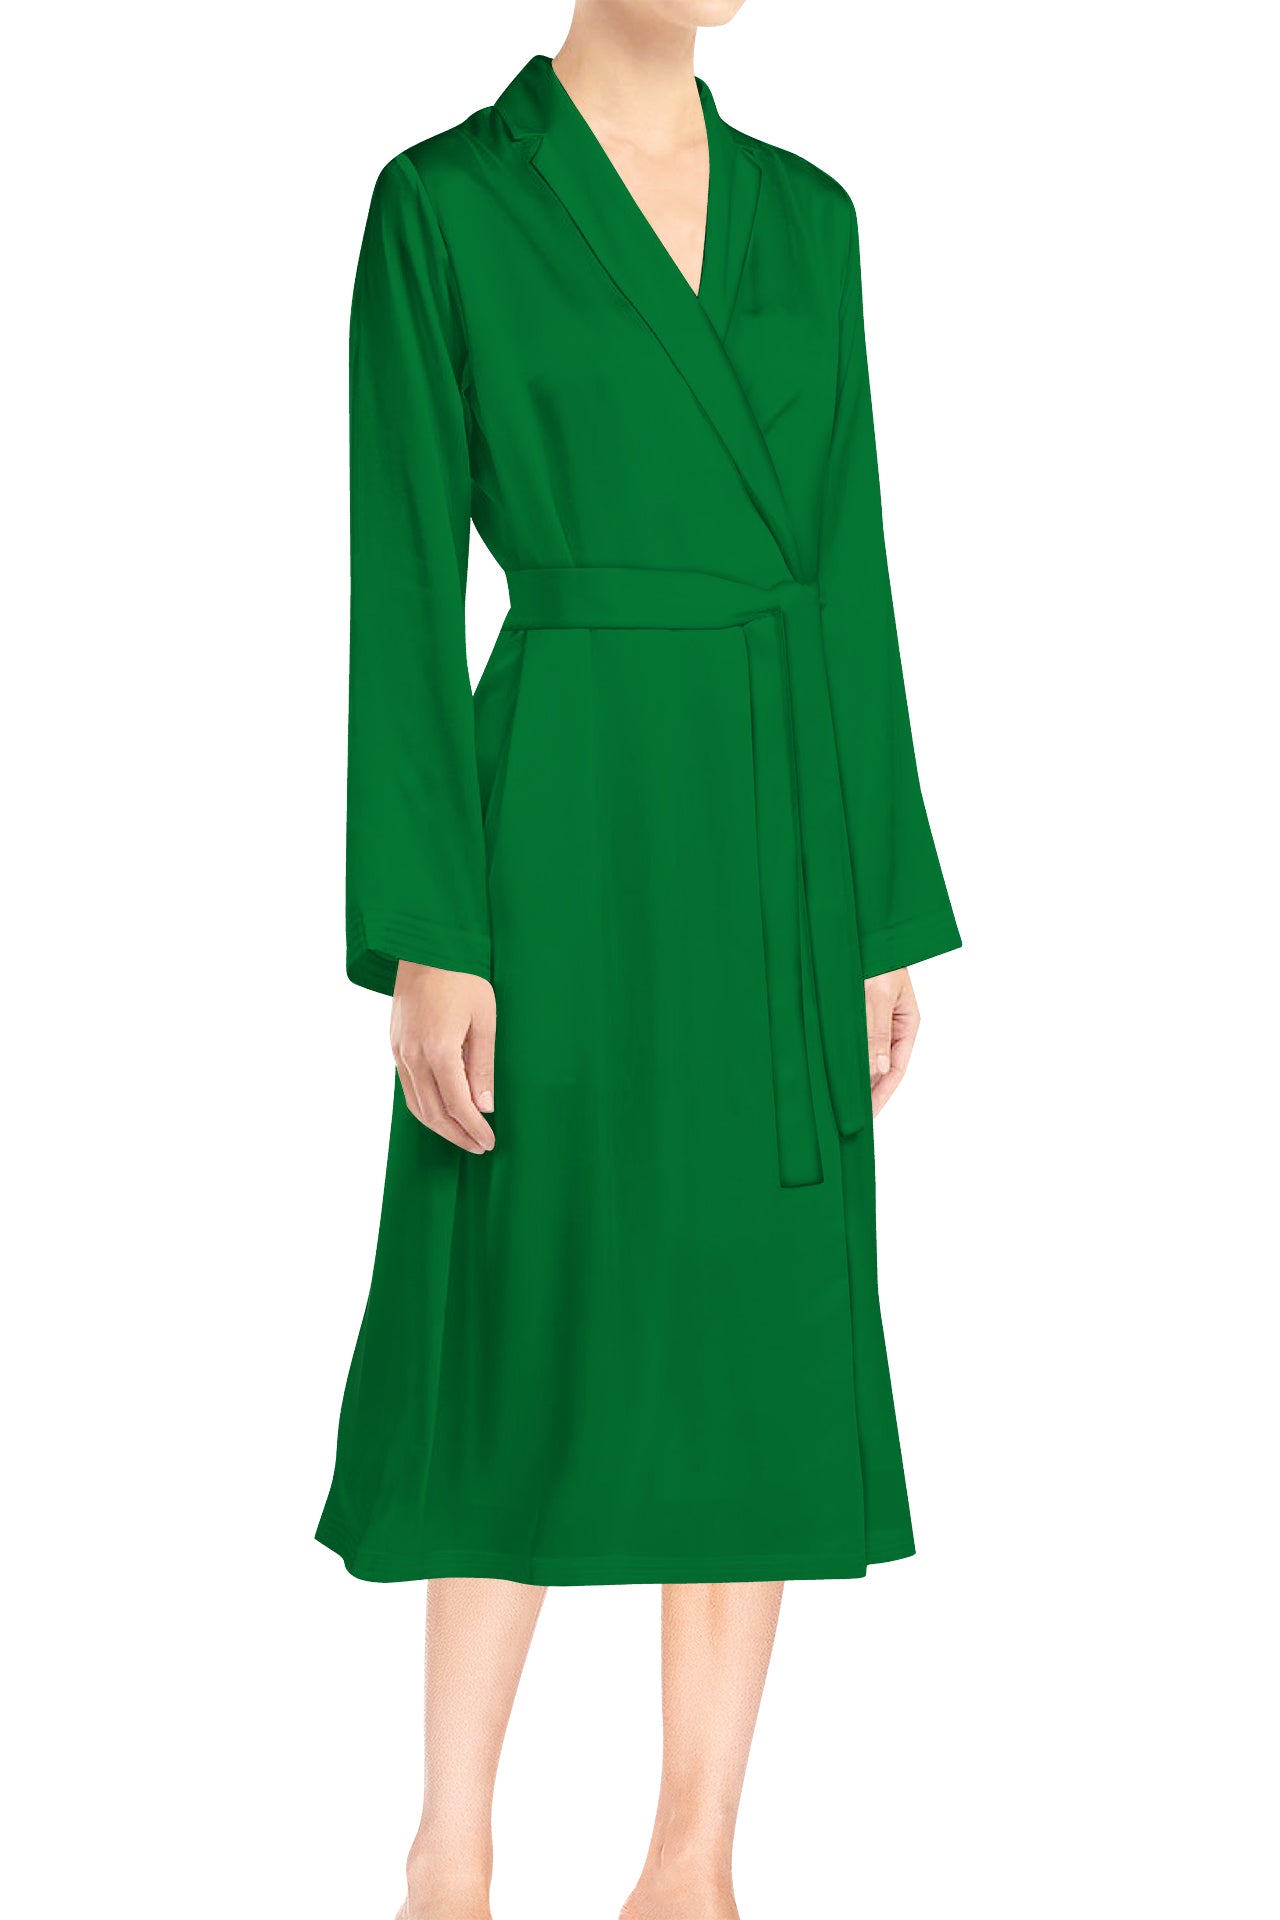 Green Midi Length Wrap Dress Made with Vegan Silk